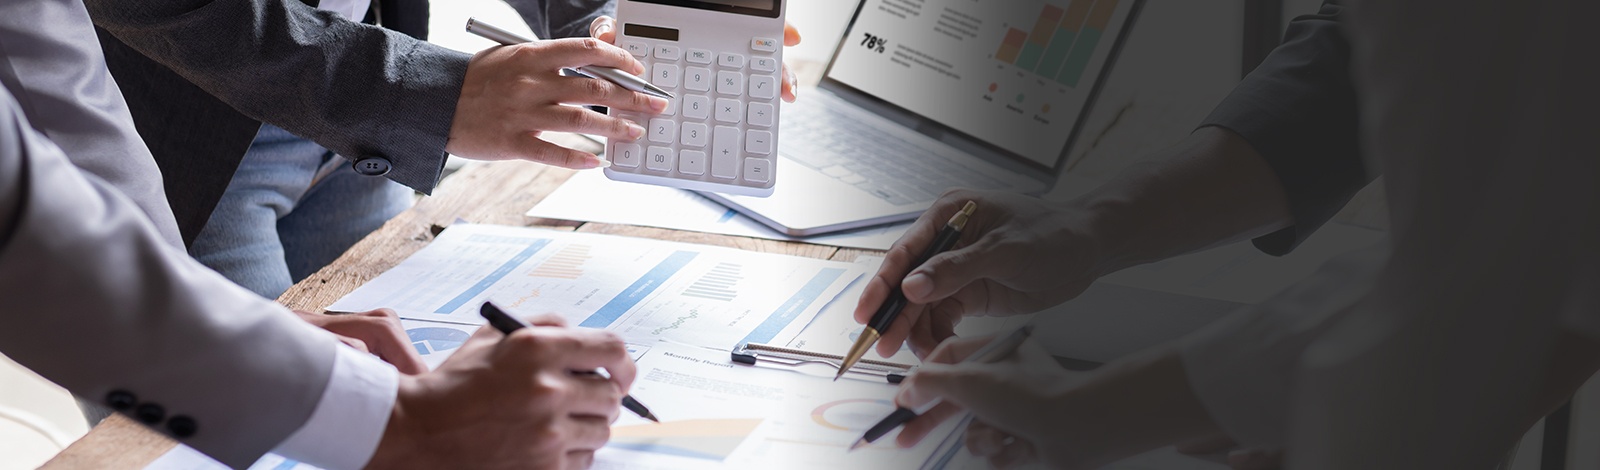 Oshawa’s Professional Accountants, Tax Preparers & Part-Time CFO